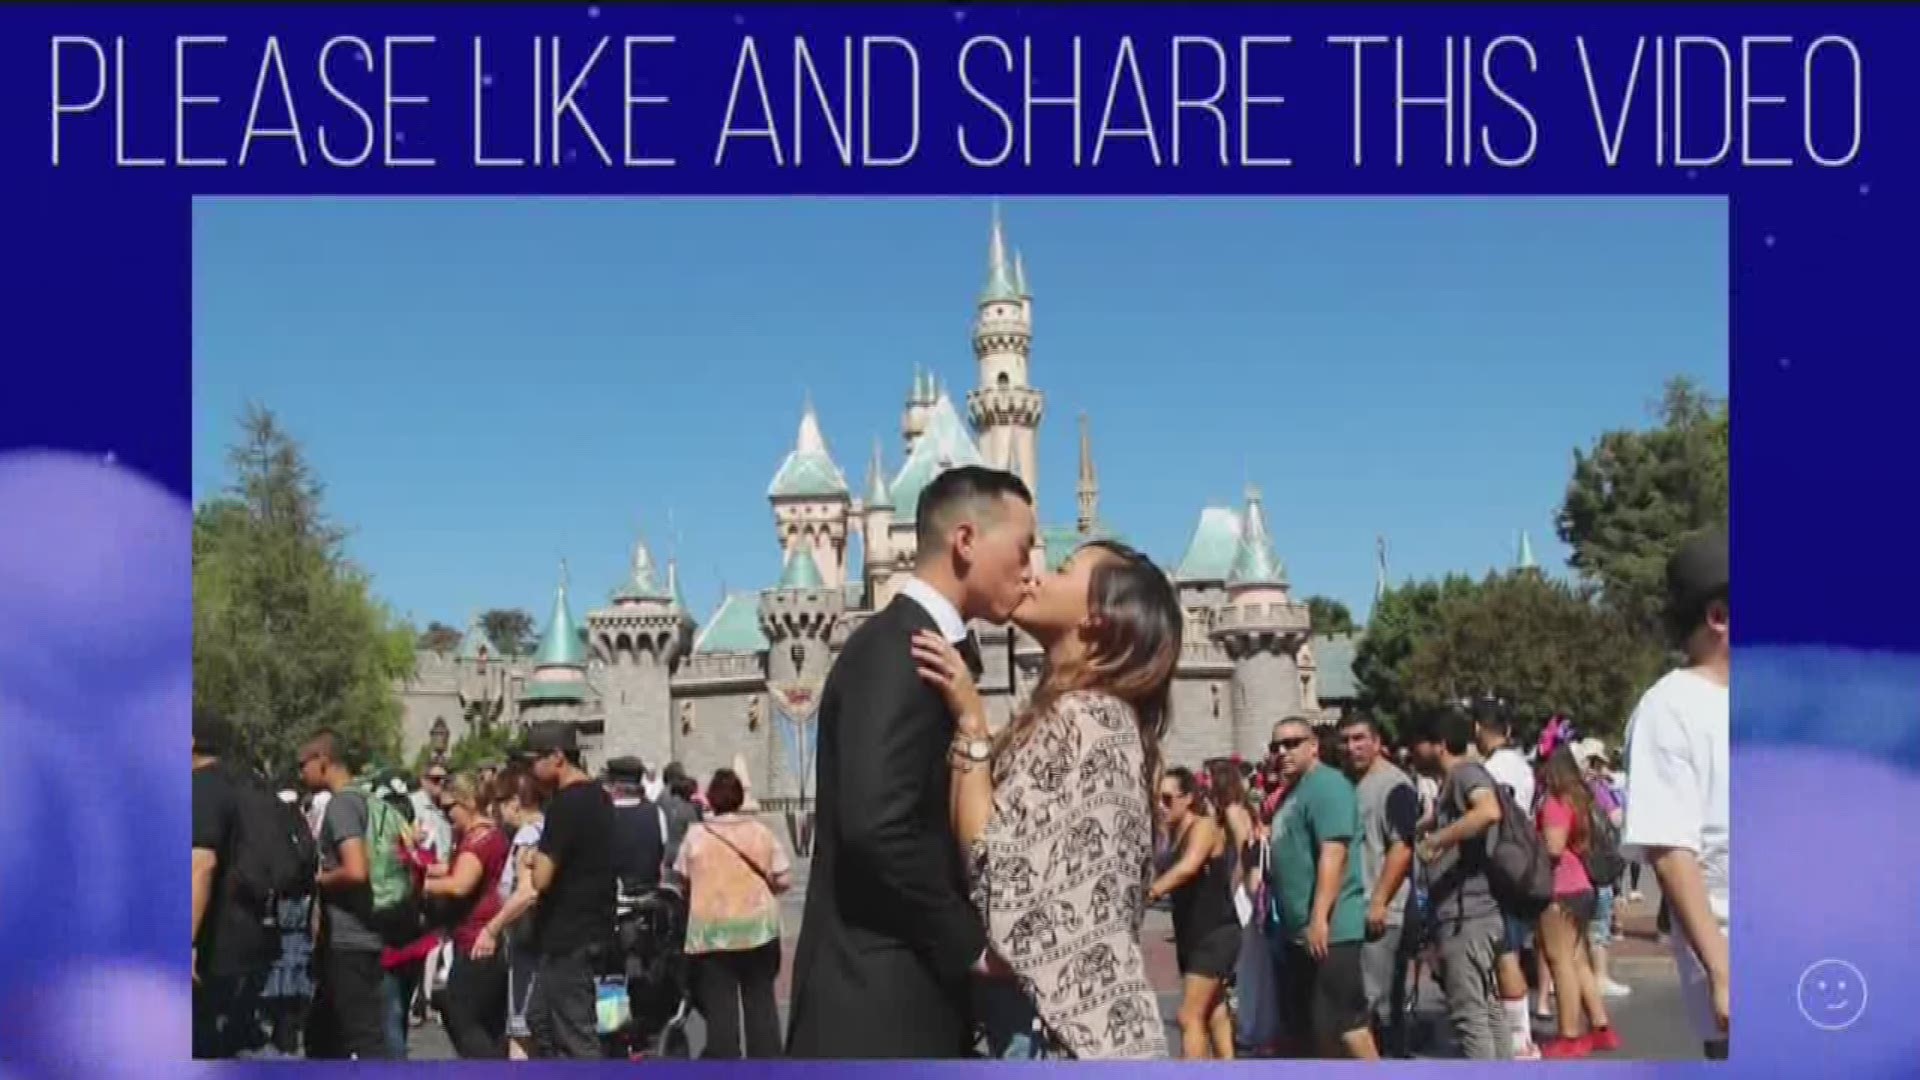 Sacramento native Shari Hakim has dreamed of a Disneyland proposal ever since she was a little girl. (Oct. 20, 2016)